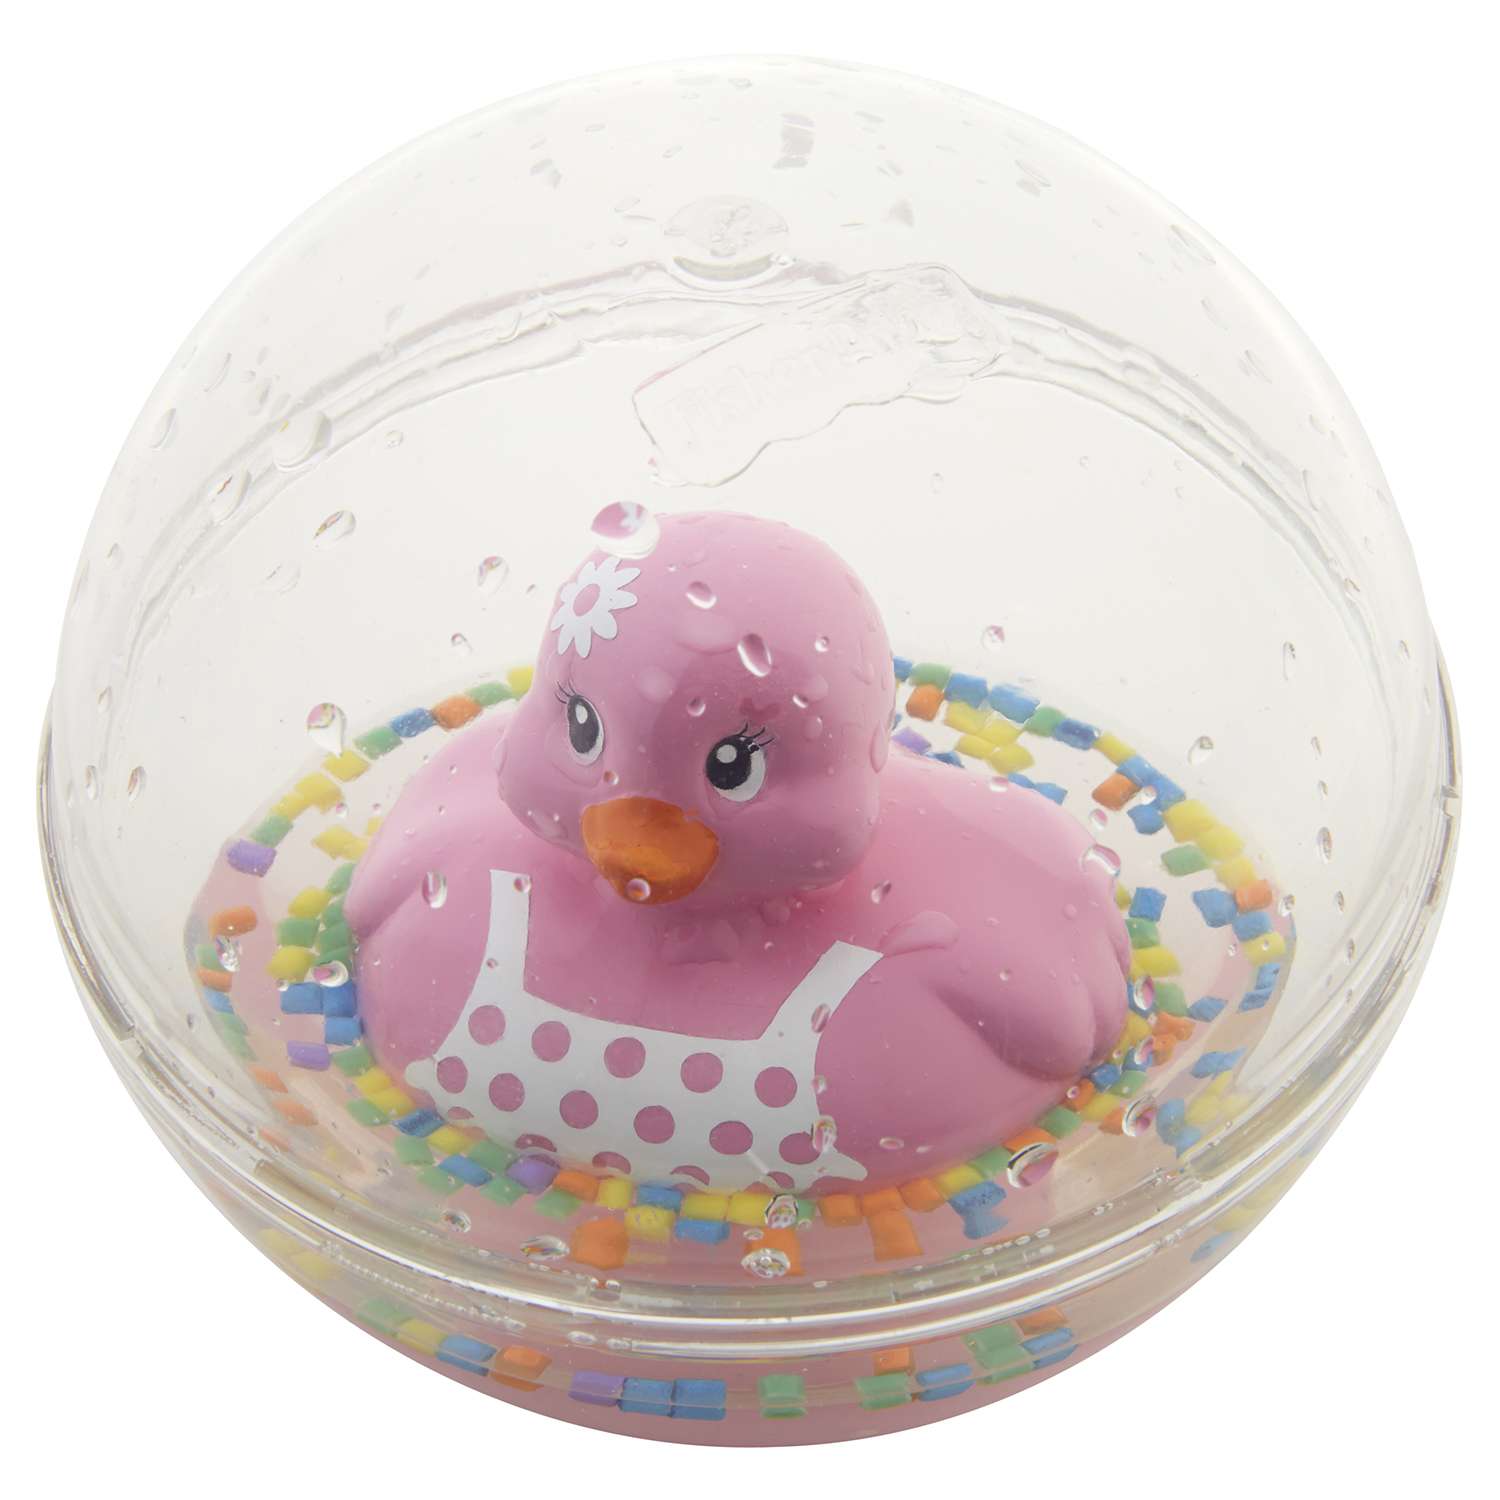 Шар Fisher Price с плавающей игрушкой Утка Розовая DRD82 - фото 1